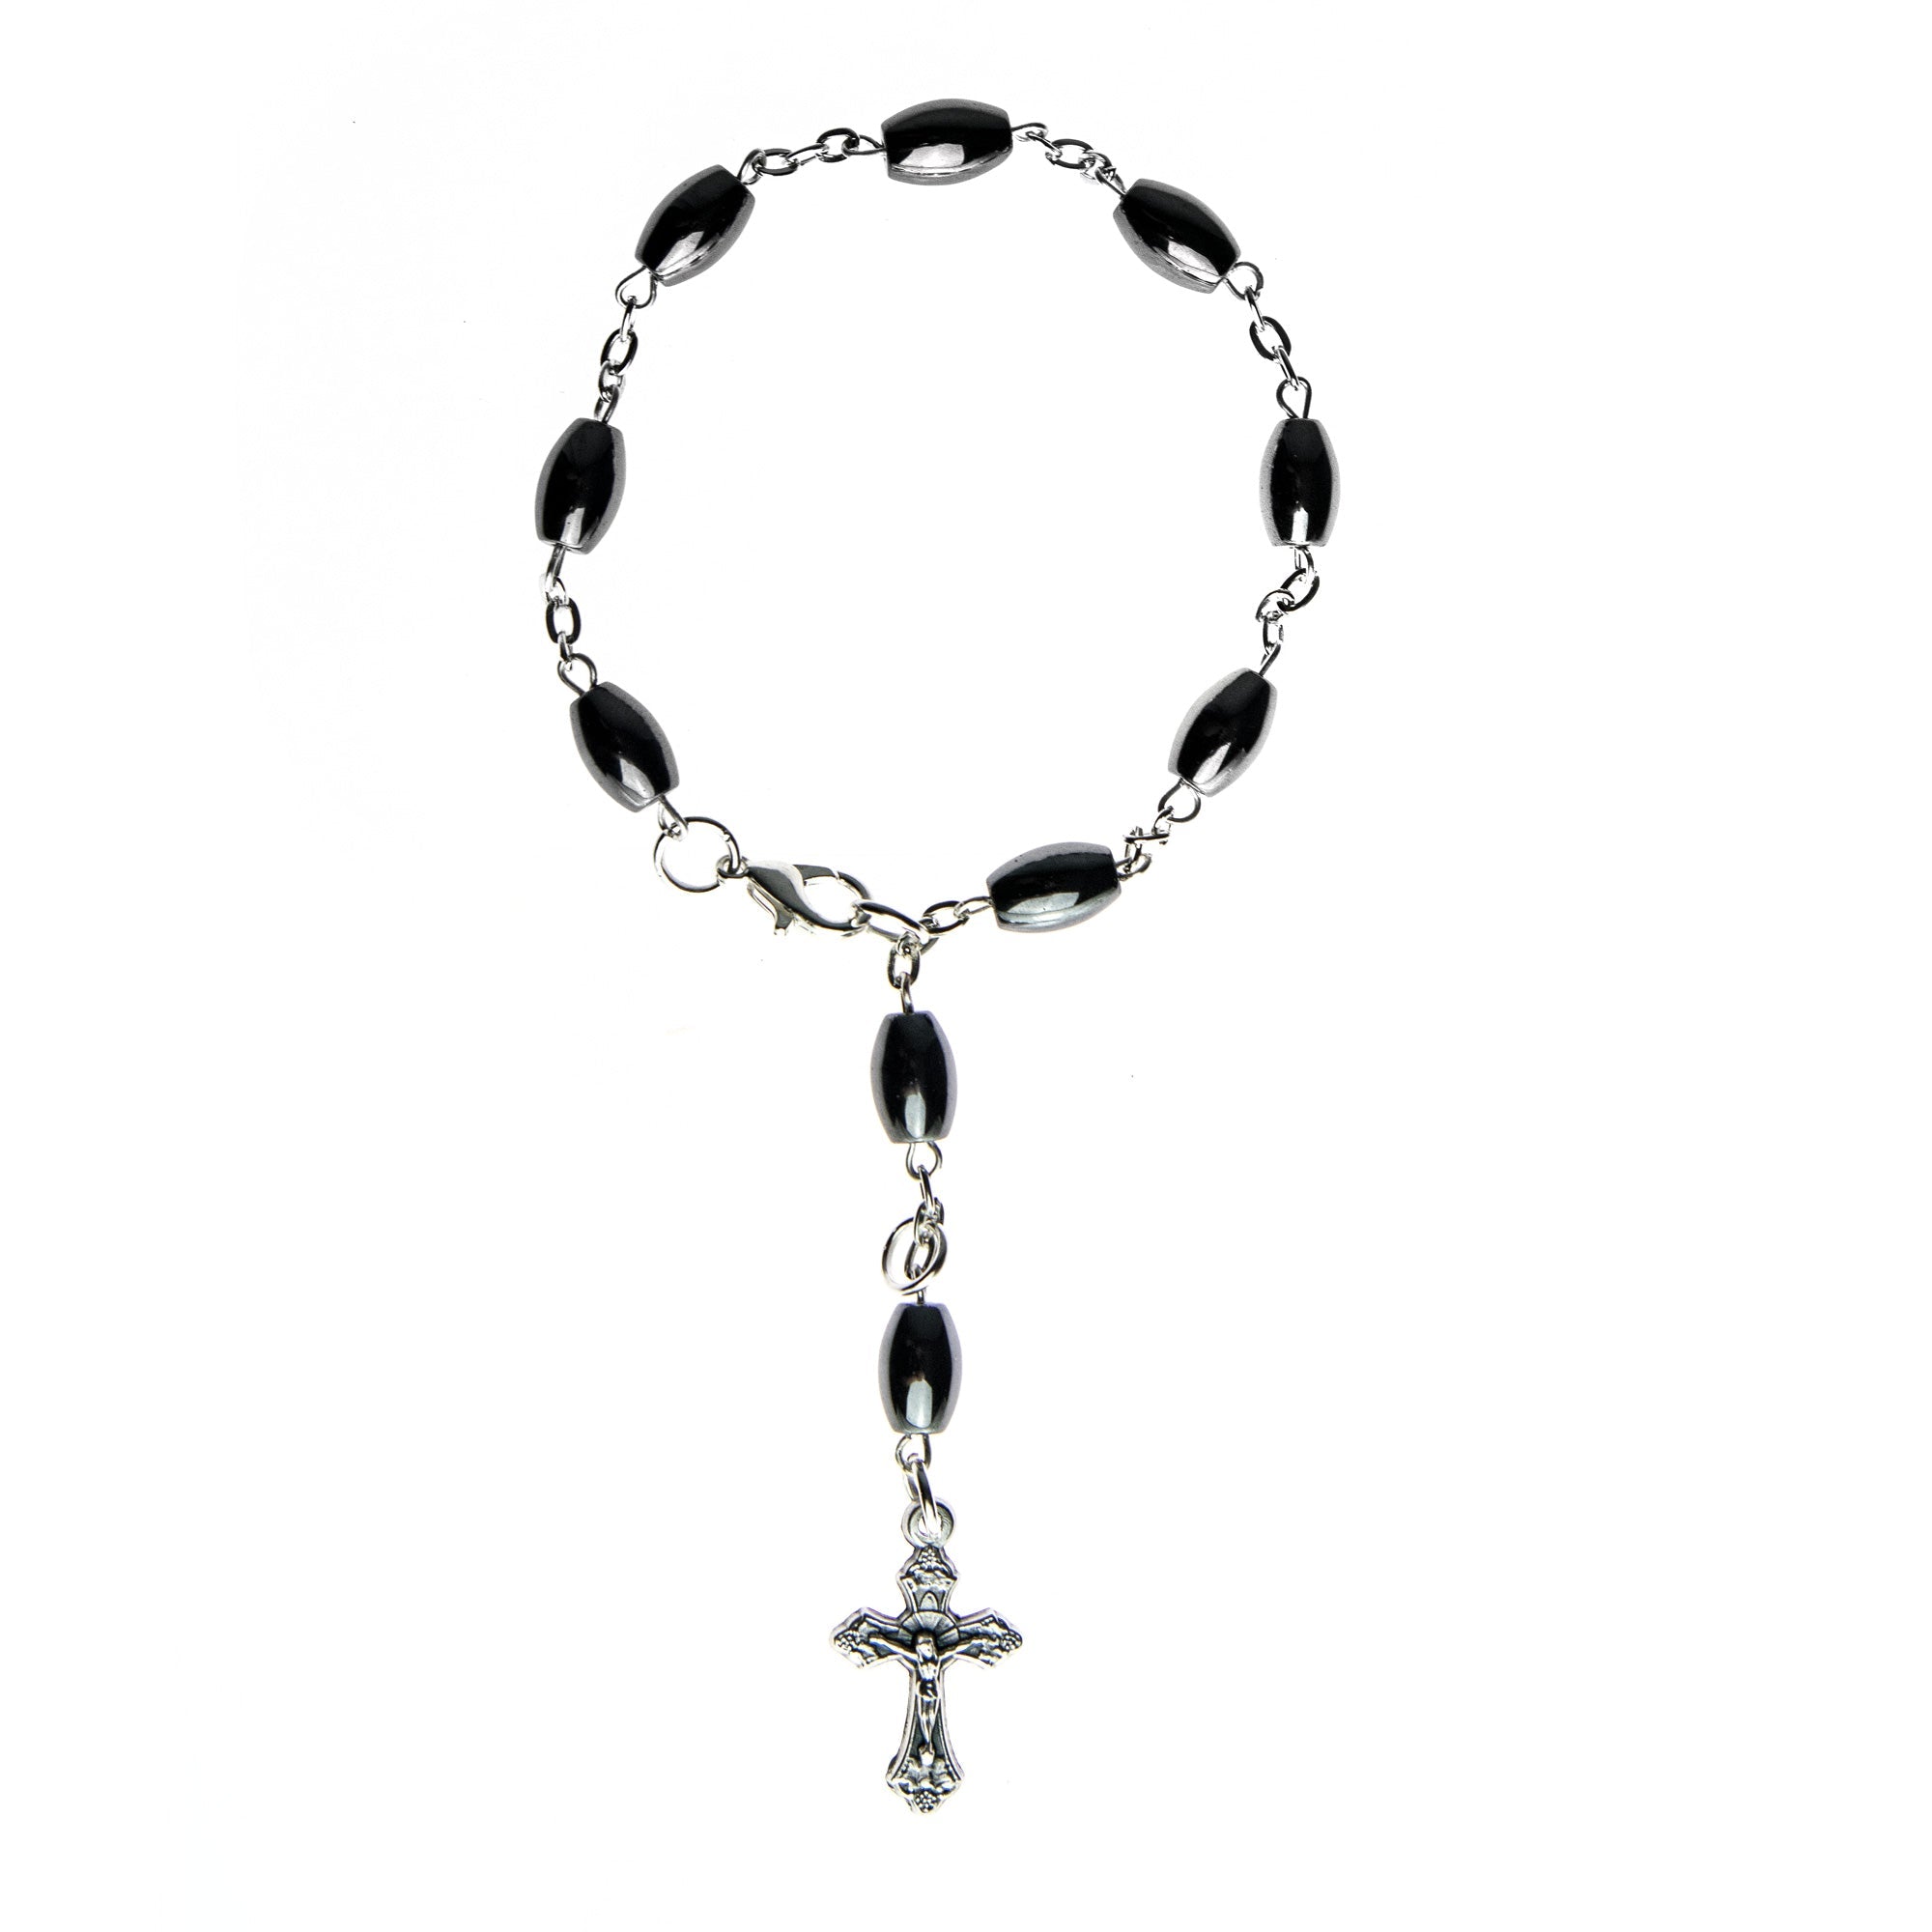 One Decade Hematite Catholic Rosary Charm Bracelet with Crucifix Cross Pendant Charm